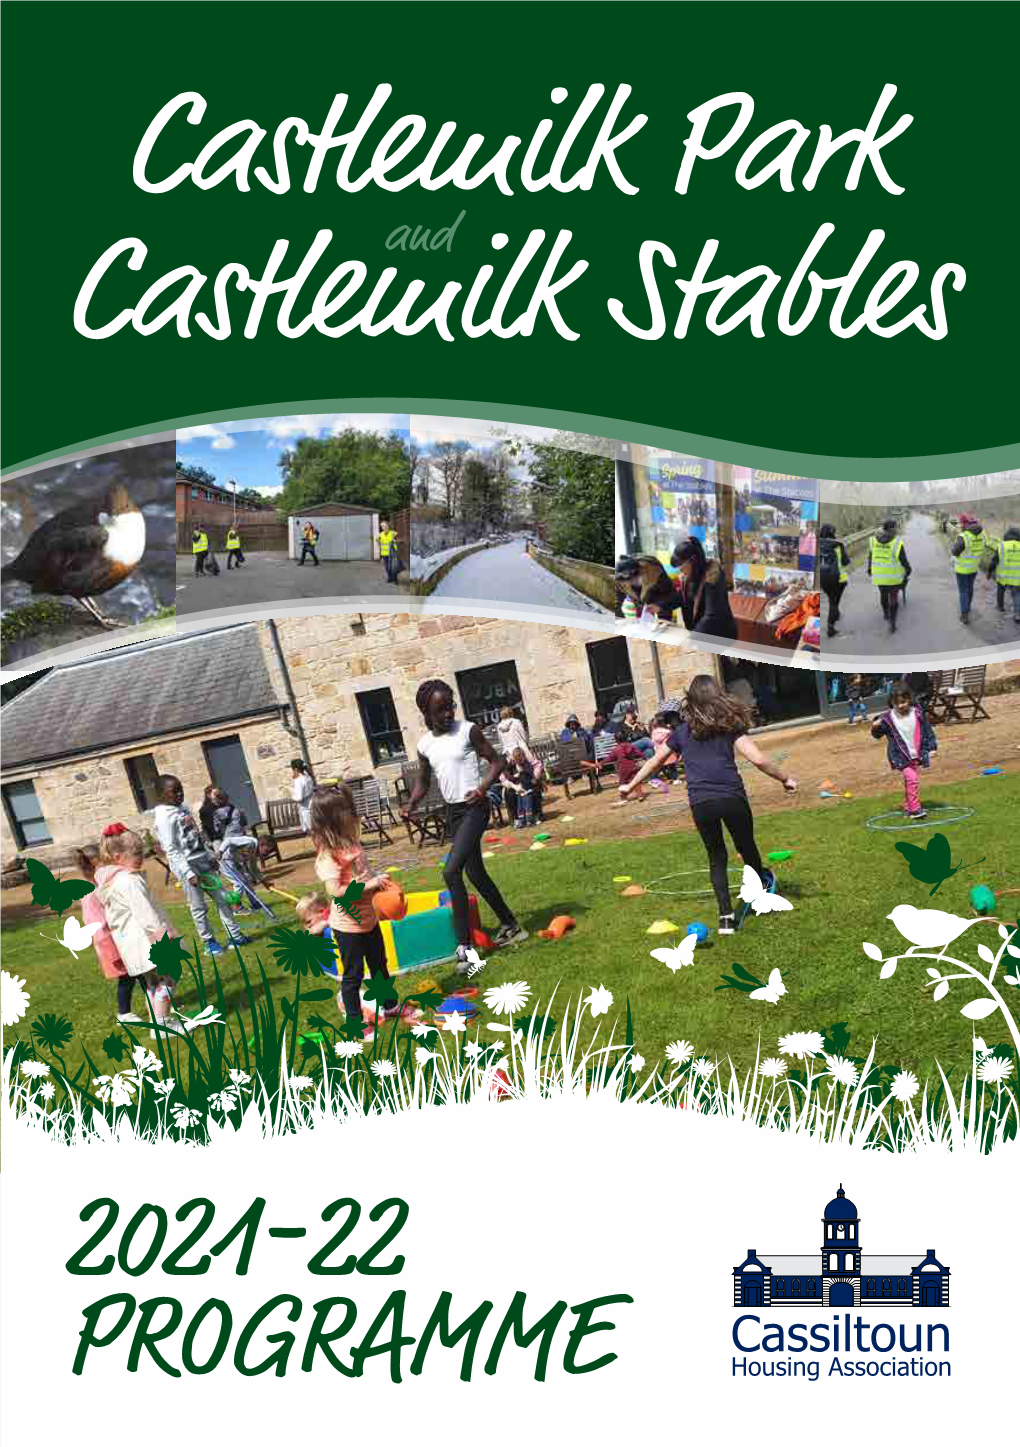 Castlemilk Park Castlemilk Stables